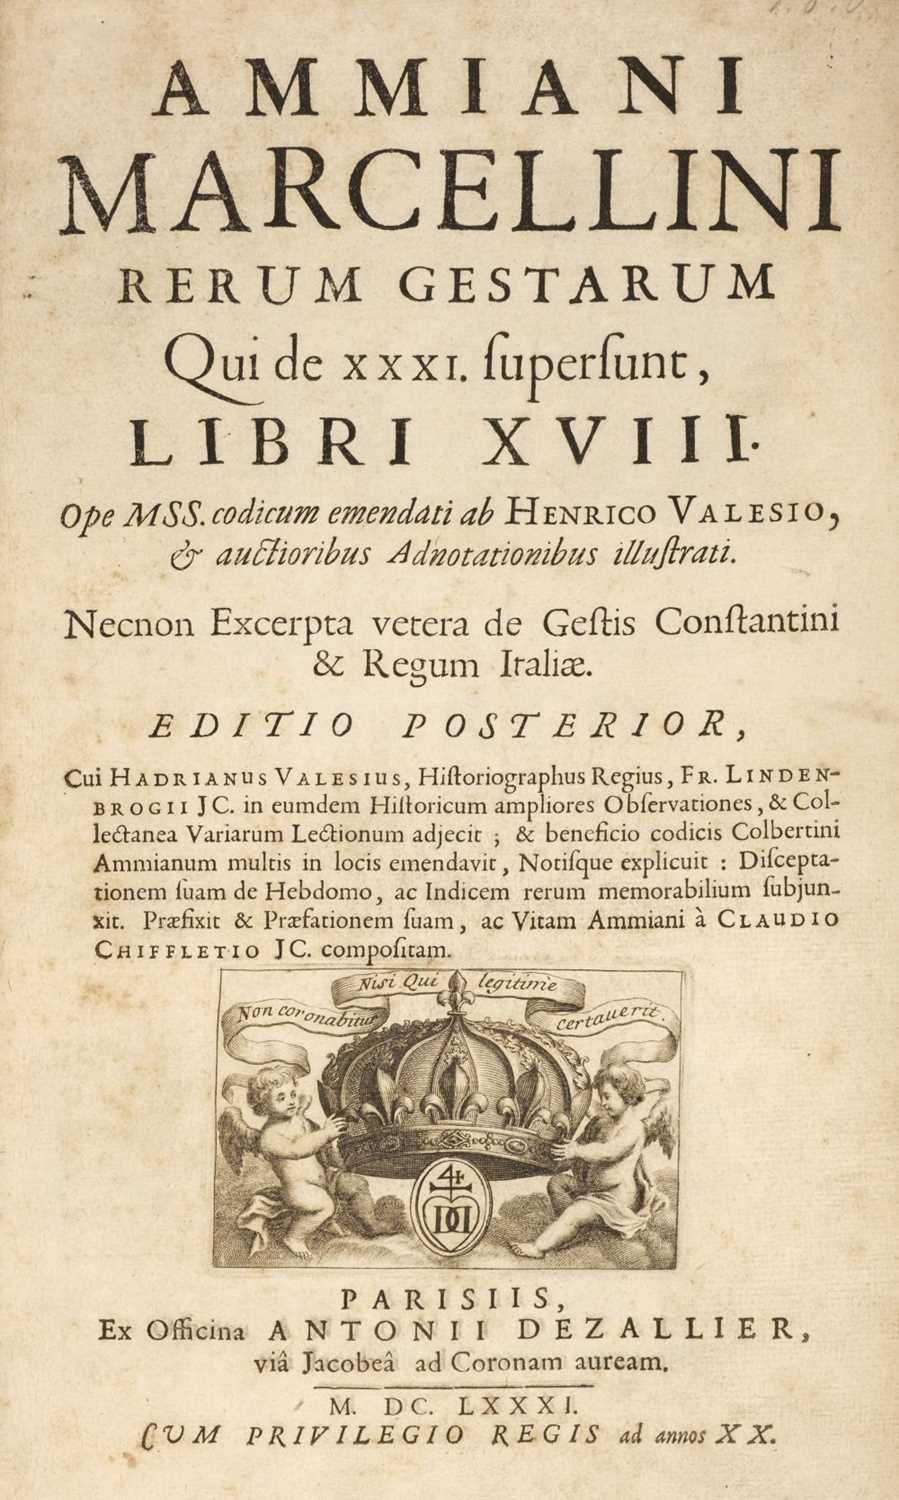 Lot 171 - Marcellinus (Ammianus). Ammiani Marcellini Rerum gestarum, 1681